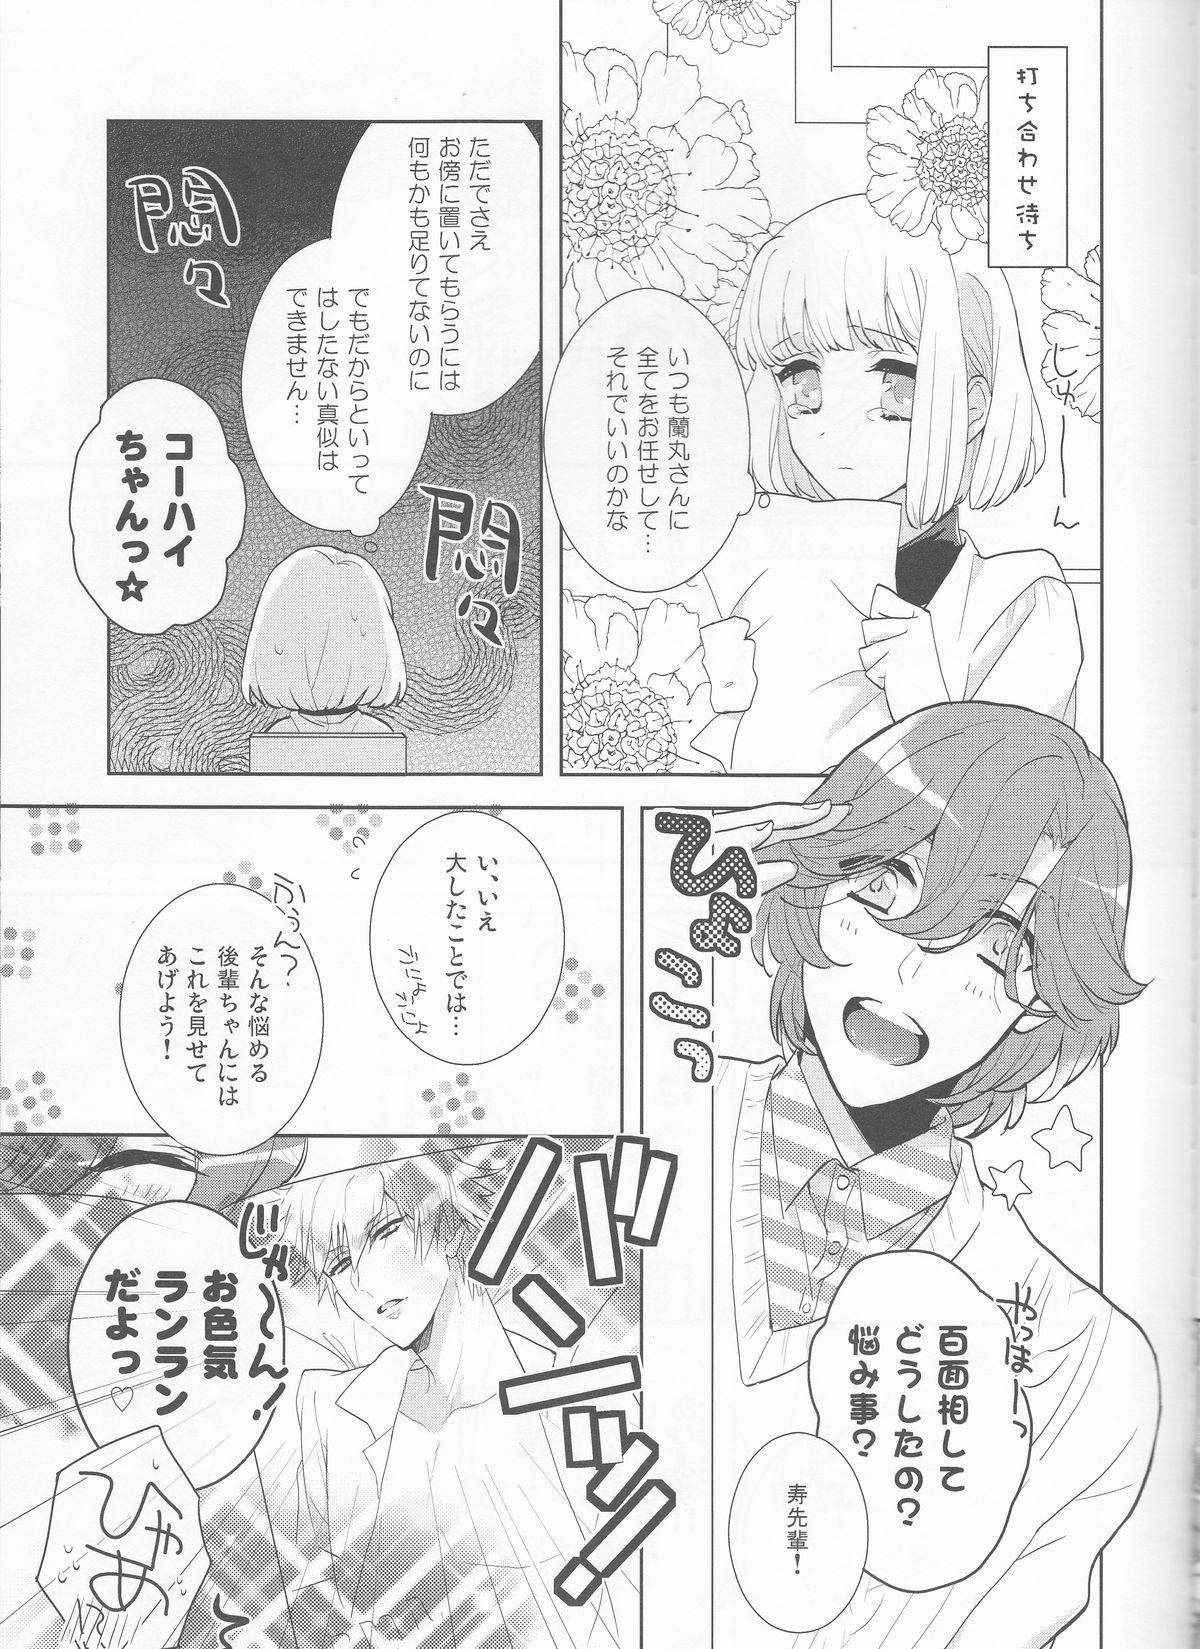 Bitch Otona no Hajimari - Uta no prince-sama Public - Page 6